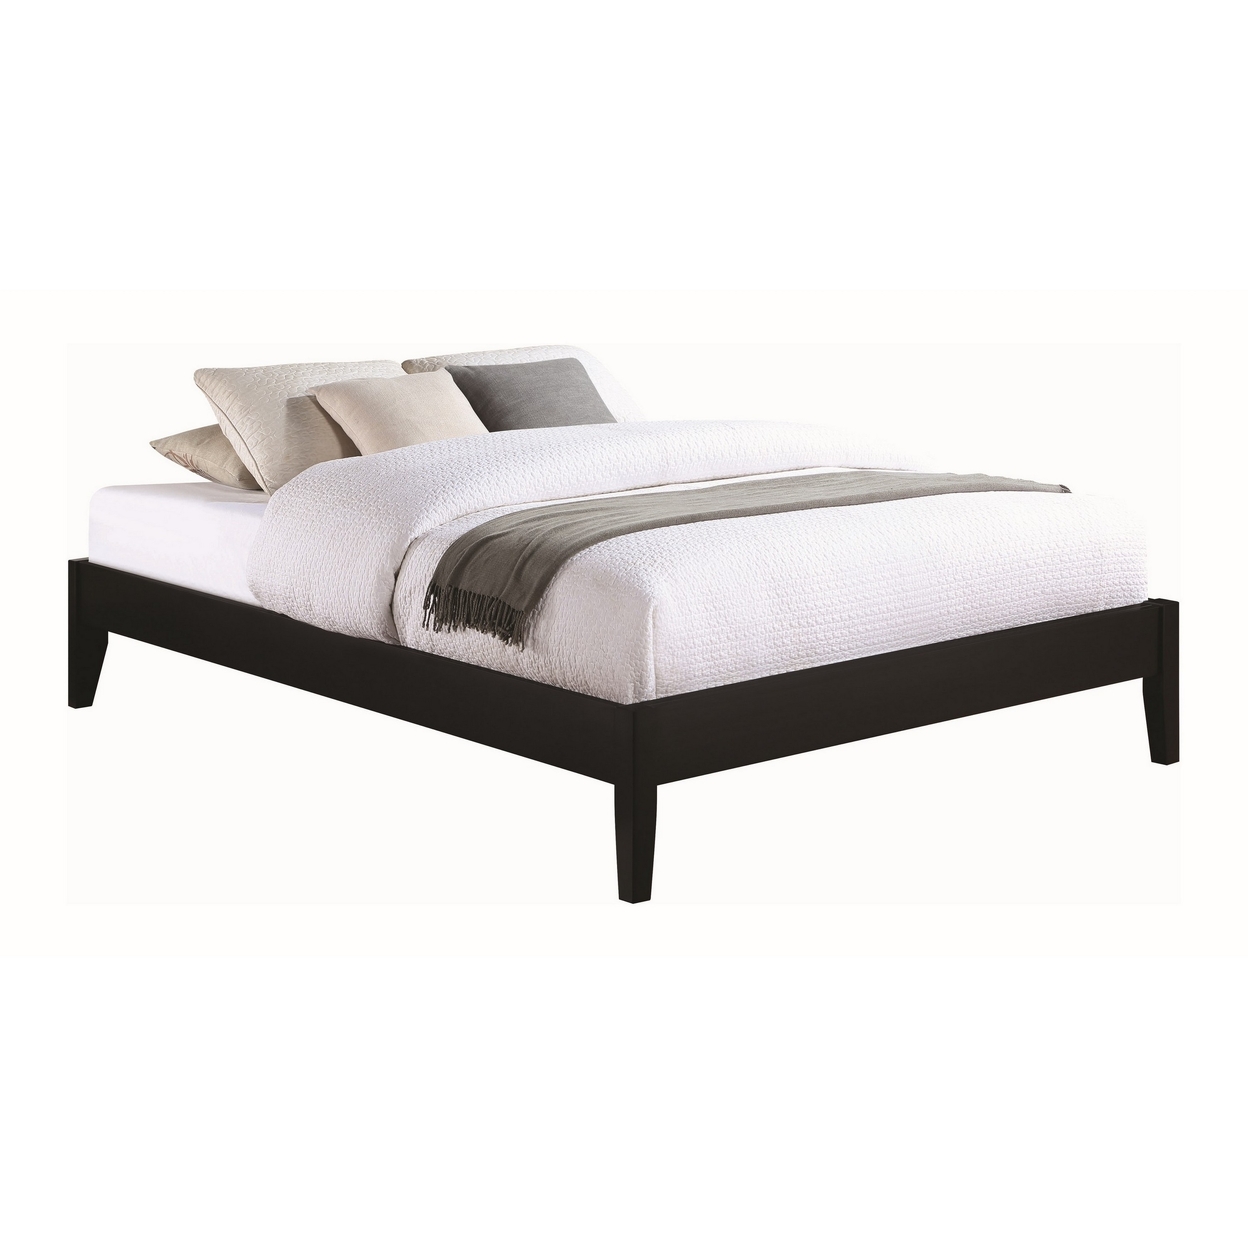 Cavi Modern Low Profile Platform King Size Bed, Panel Sides, Slats, Black- Saltoro Sherpi